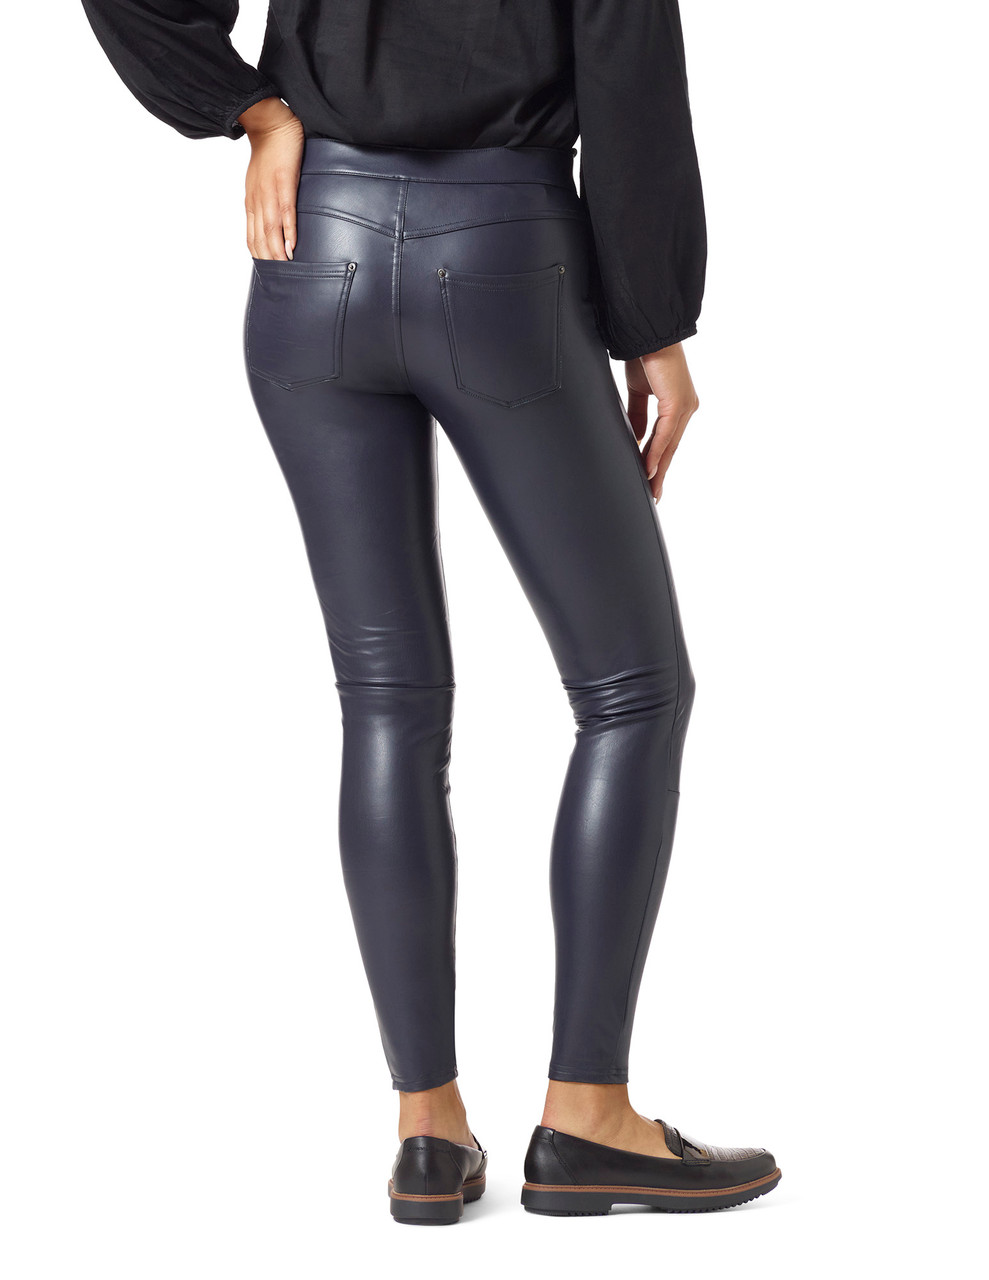 Matte Black Faux Leather Leatherette Leggings High Waist Pants Fleece  inside